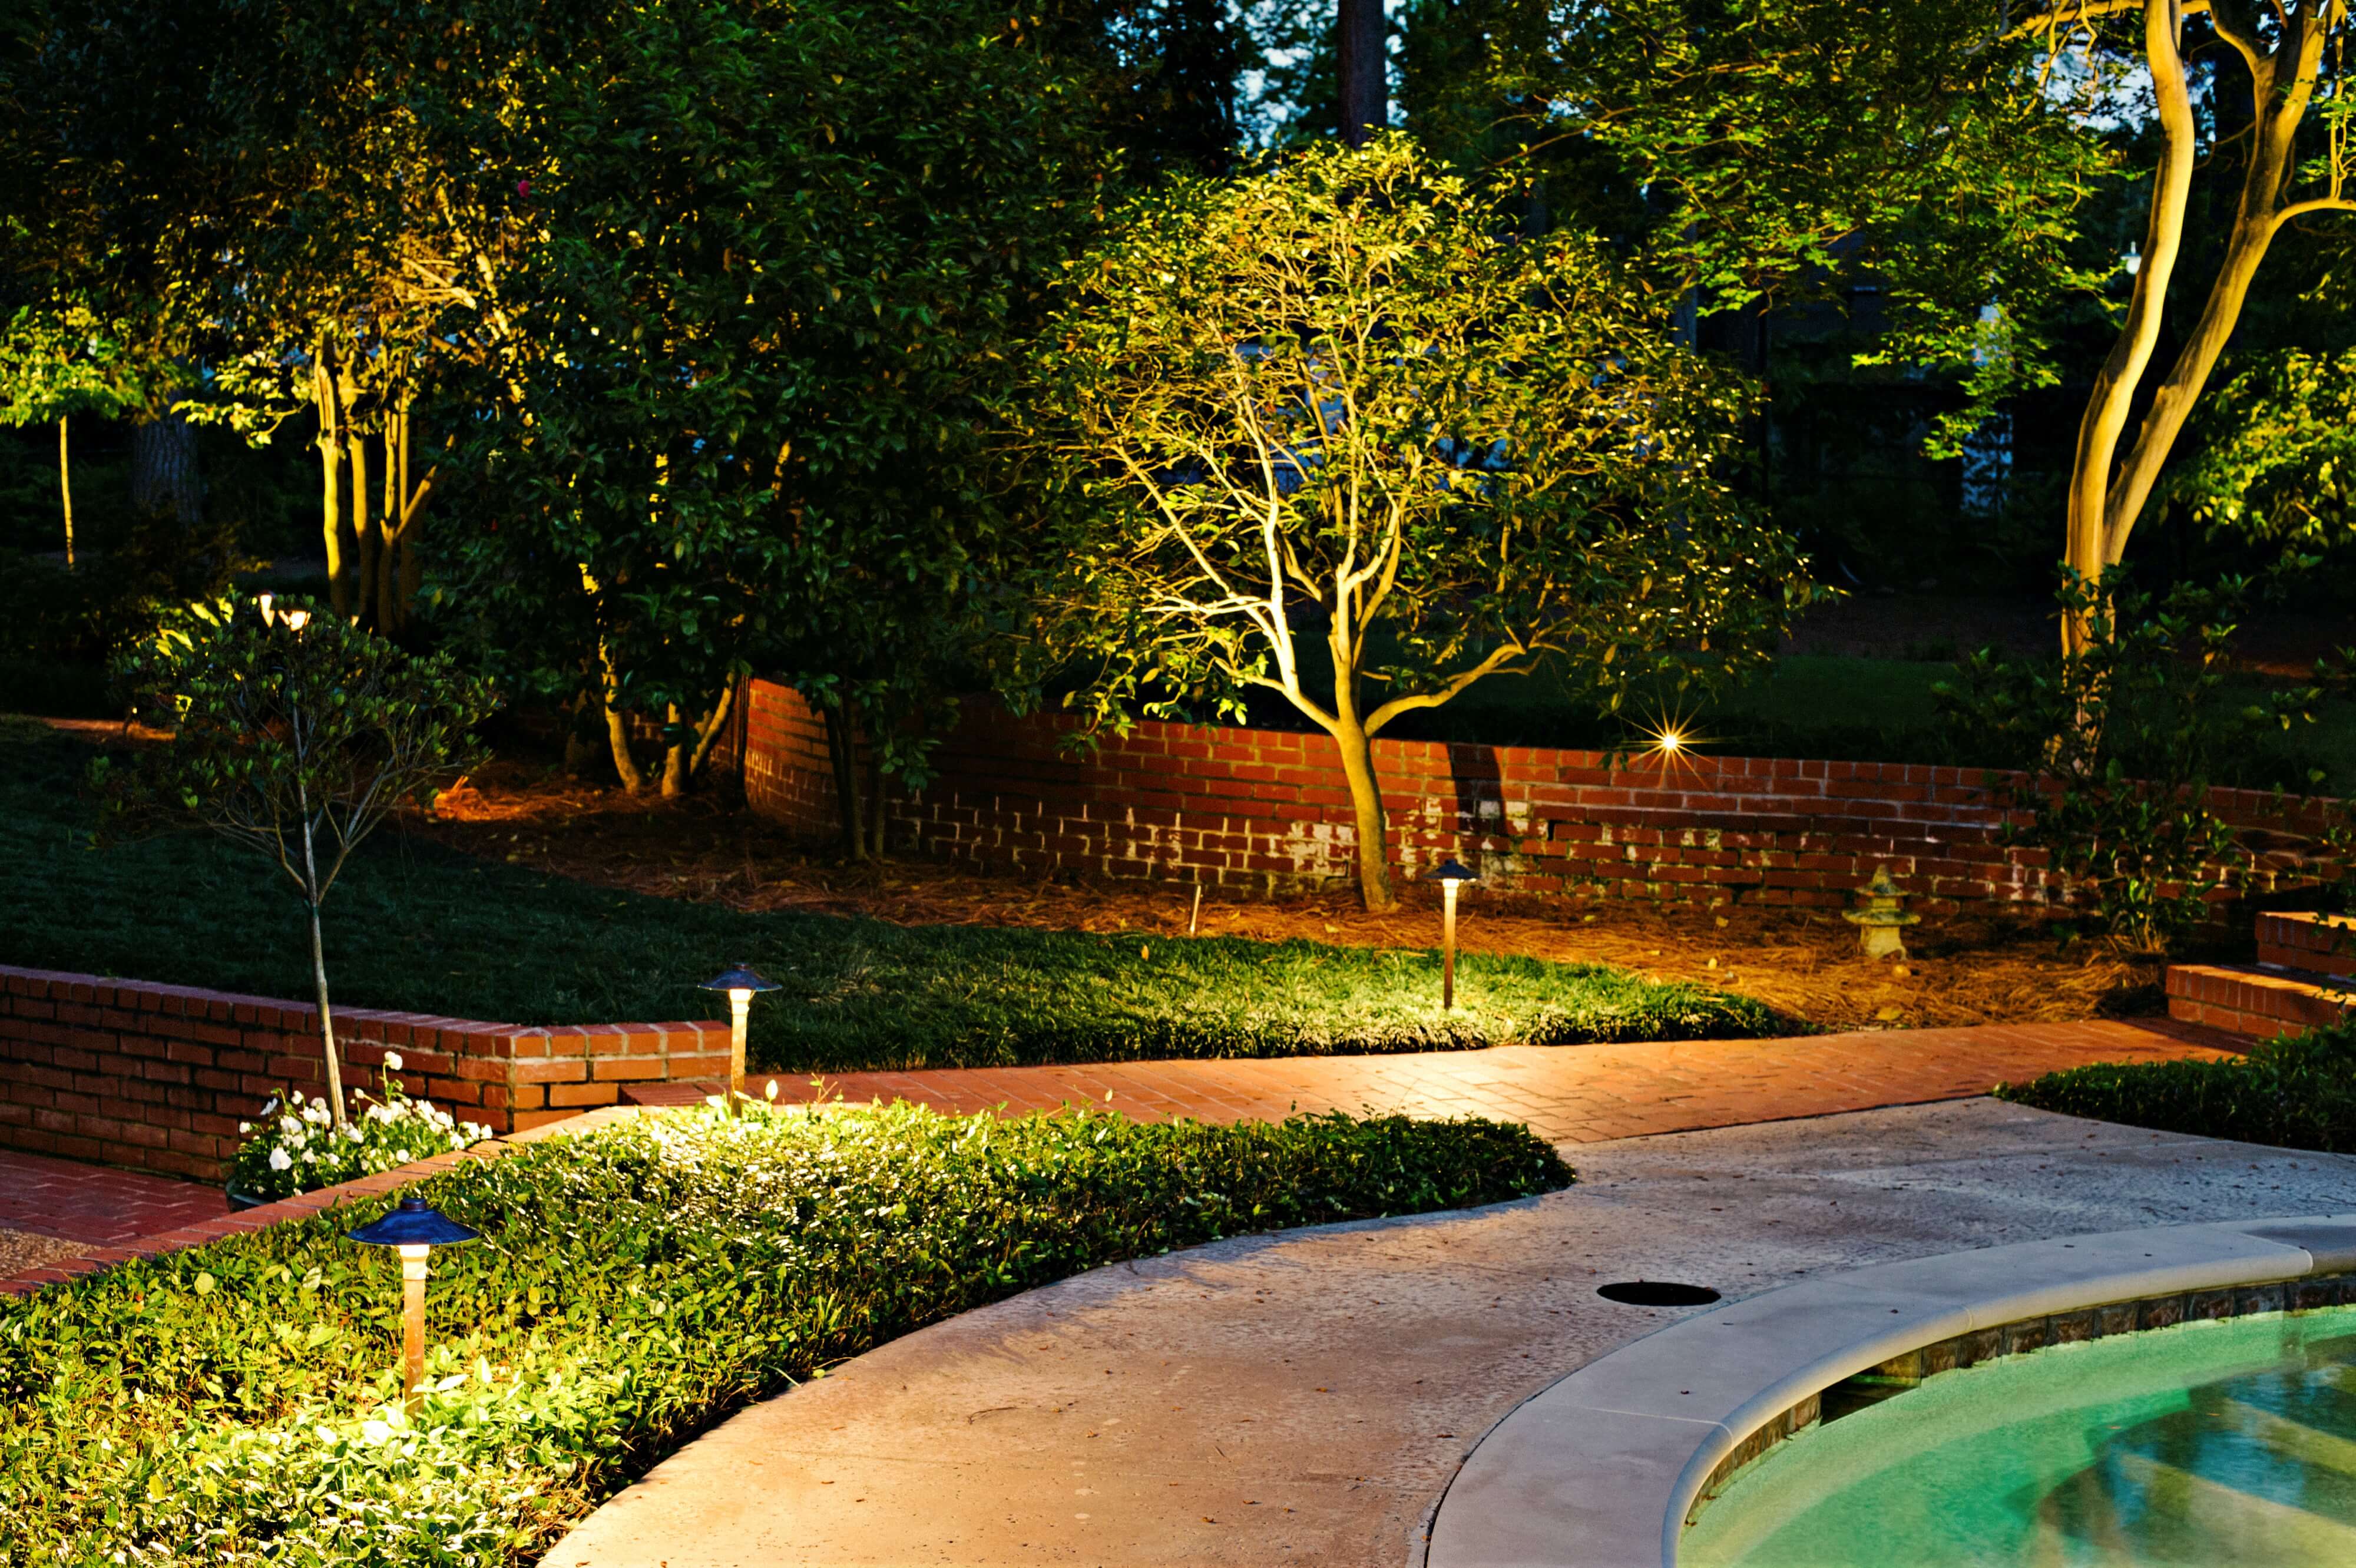 Lighting along pool and pathway